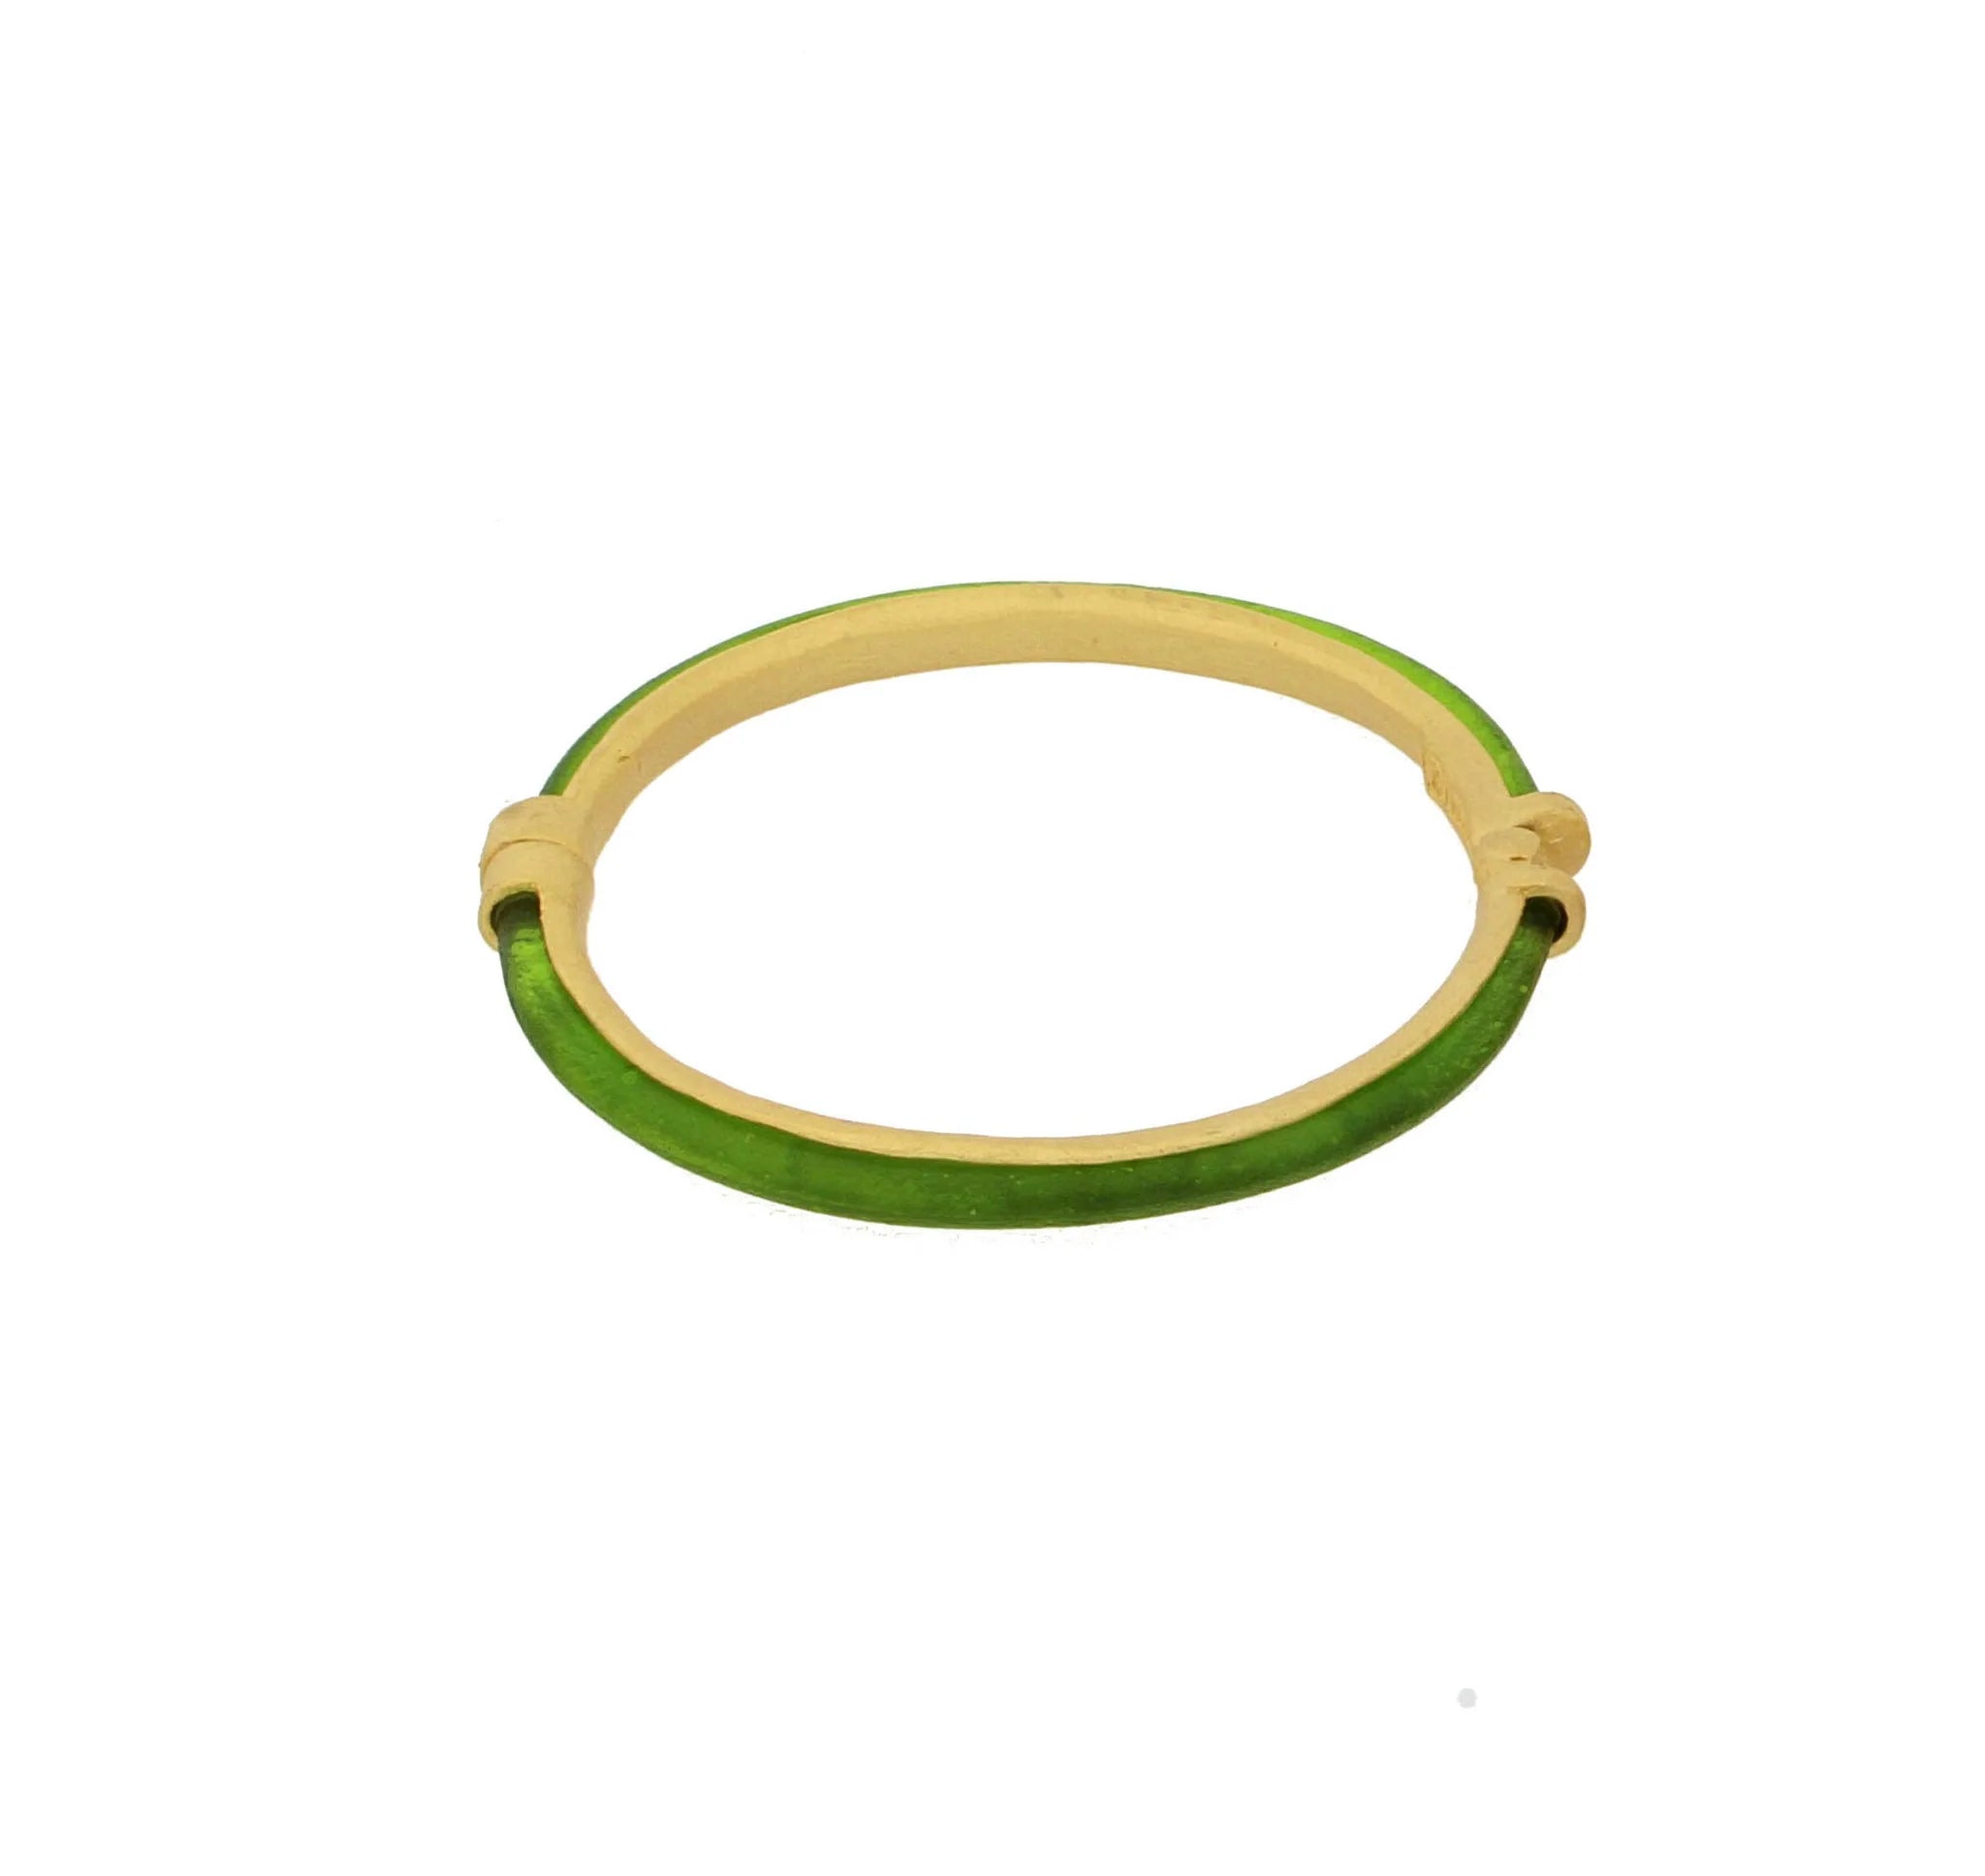 green glass gold bangle